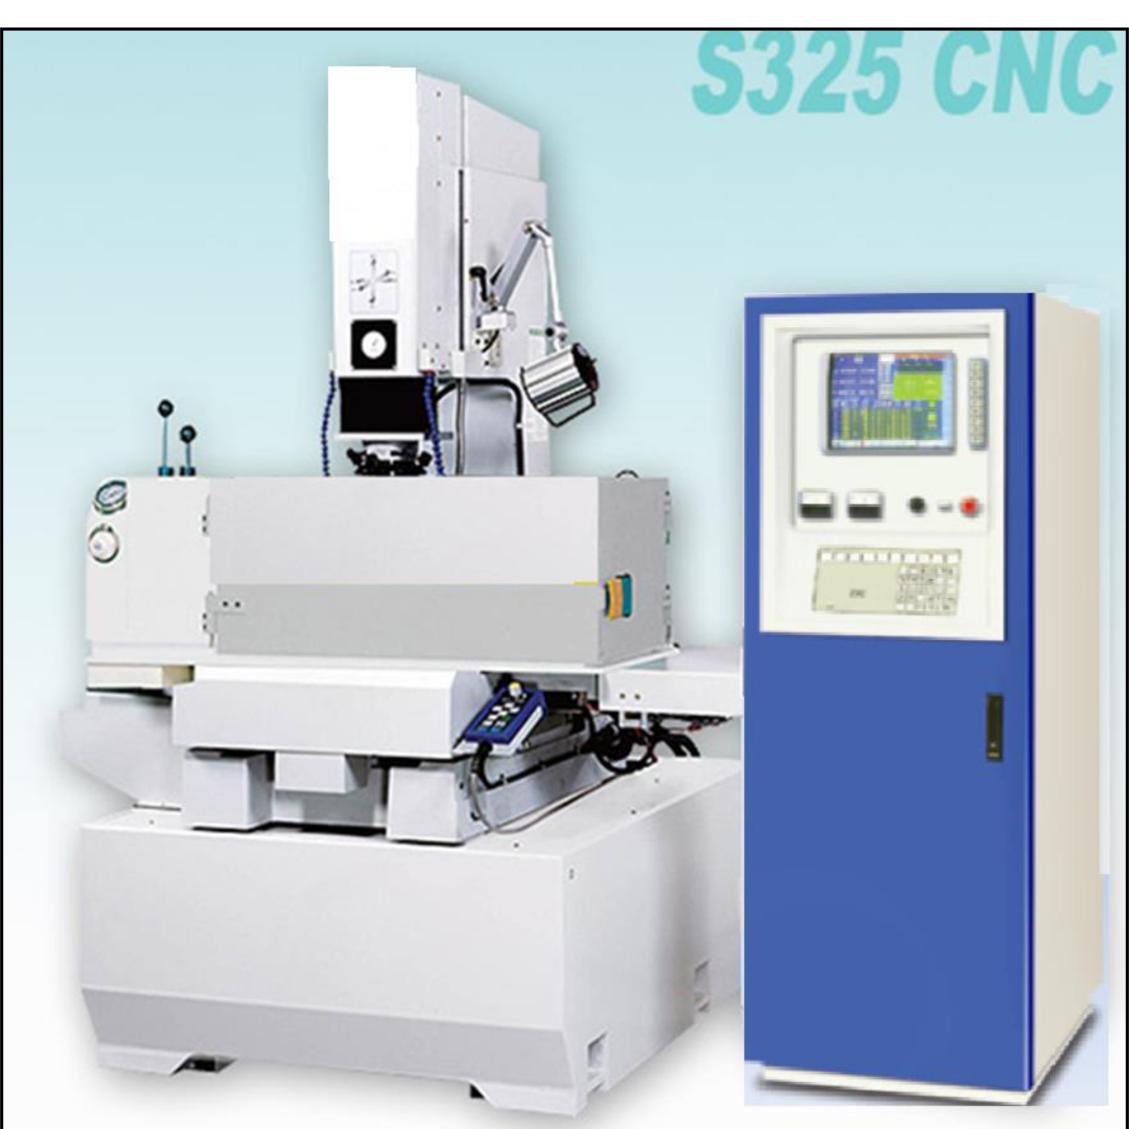 S325 CNC Series 